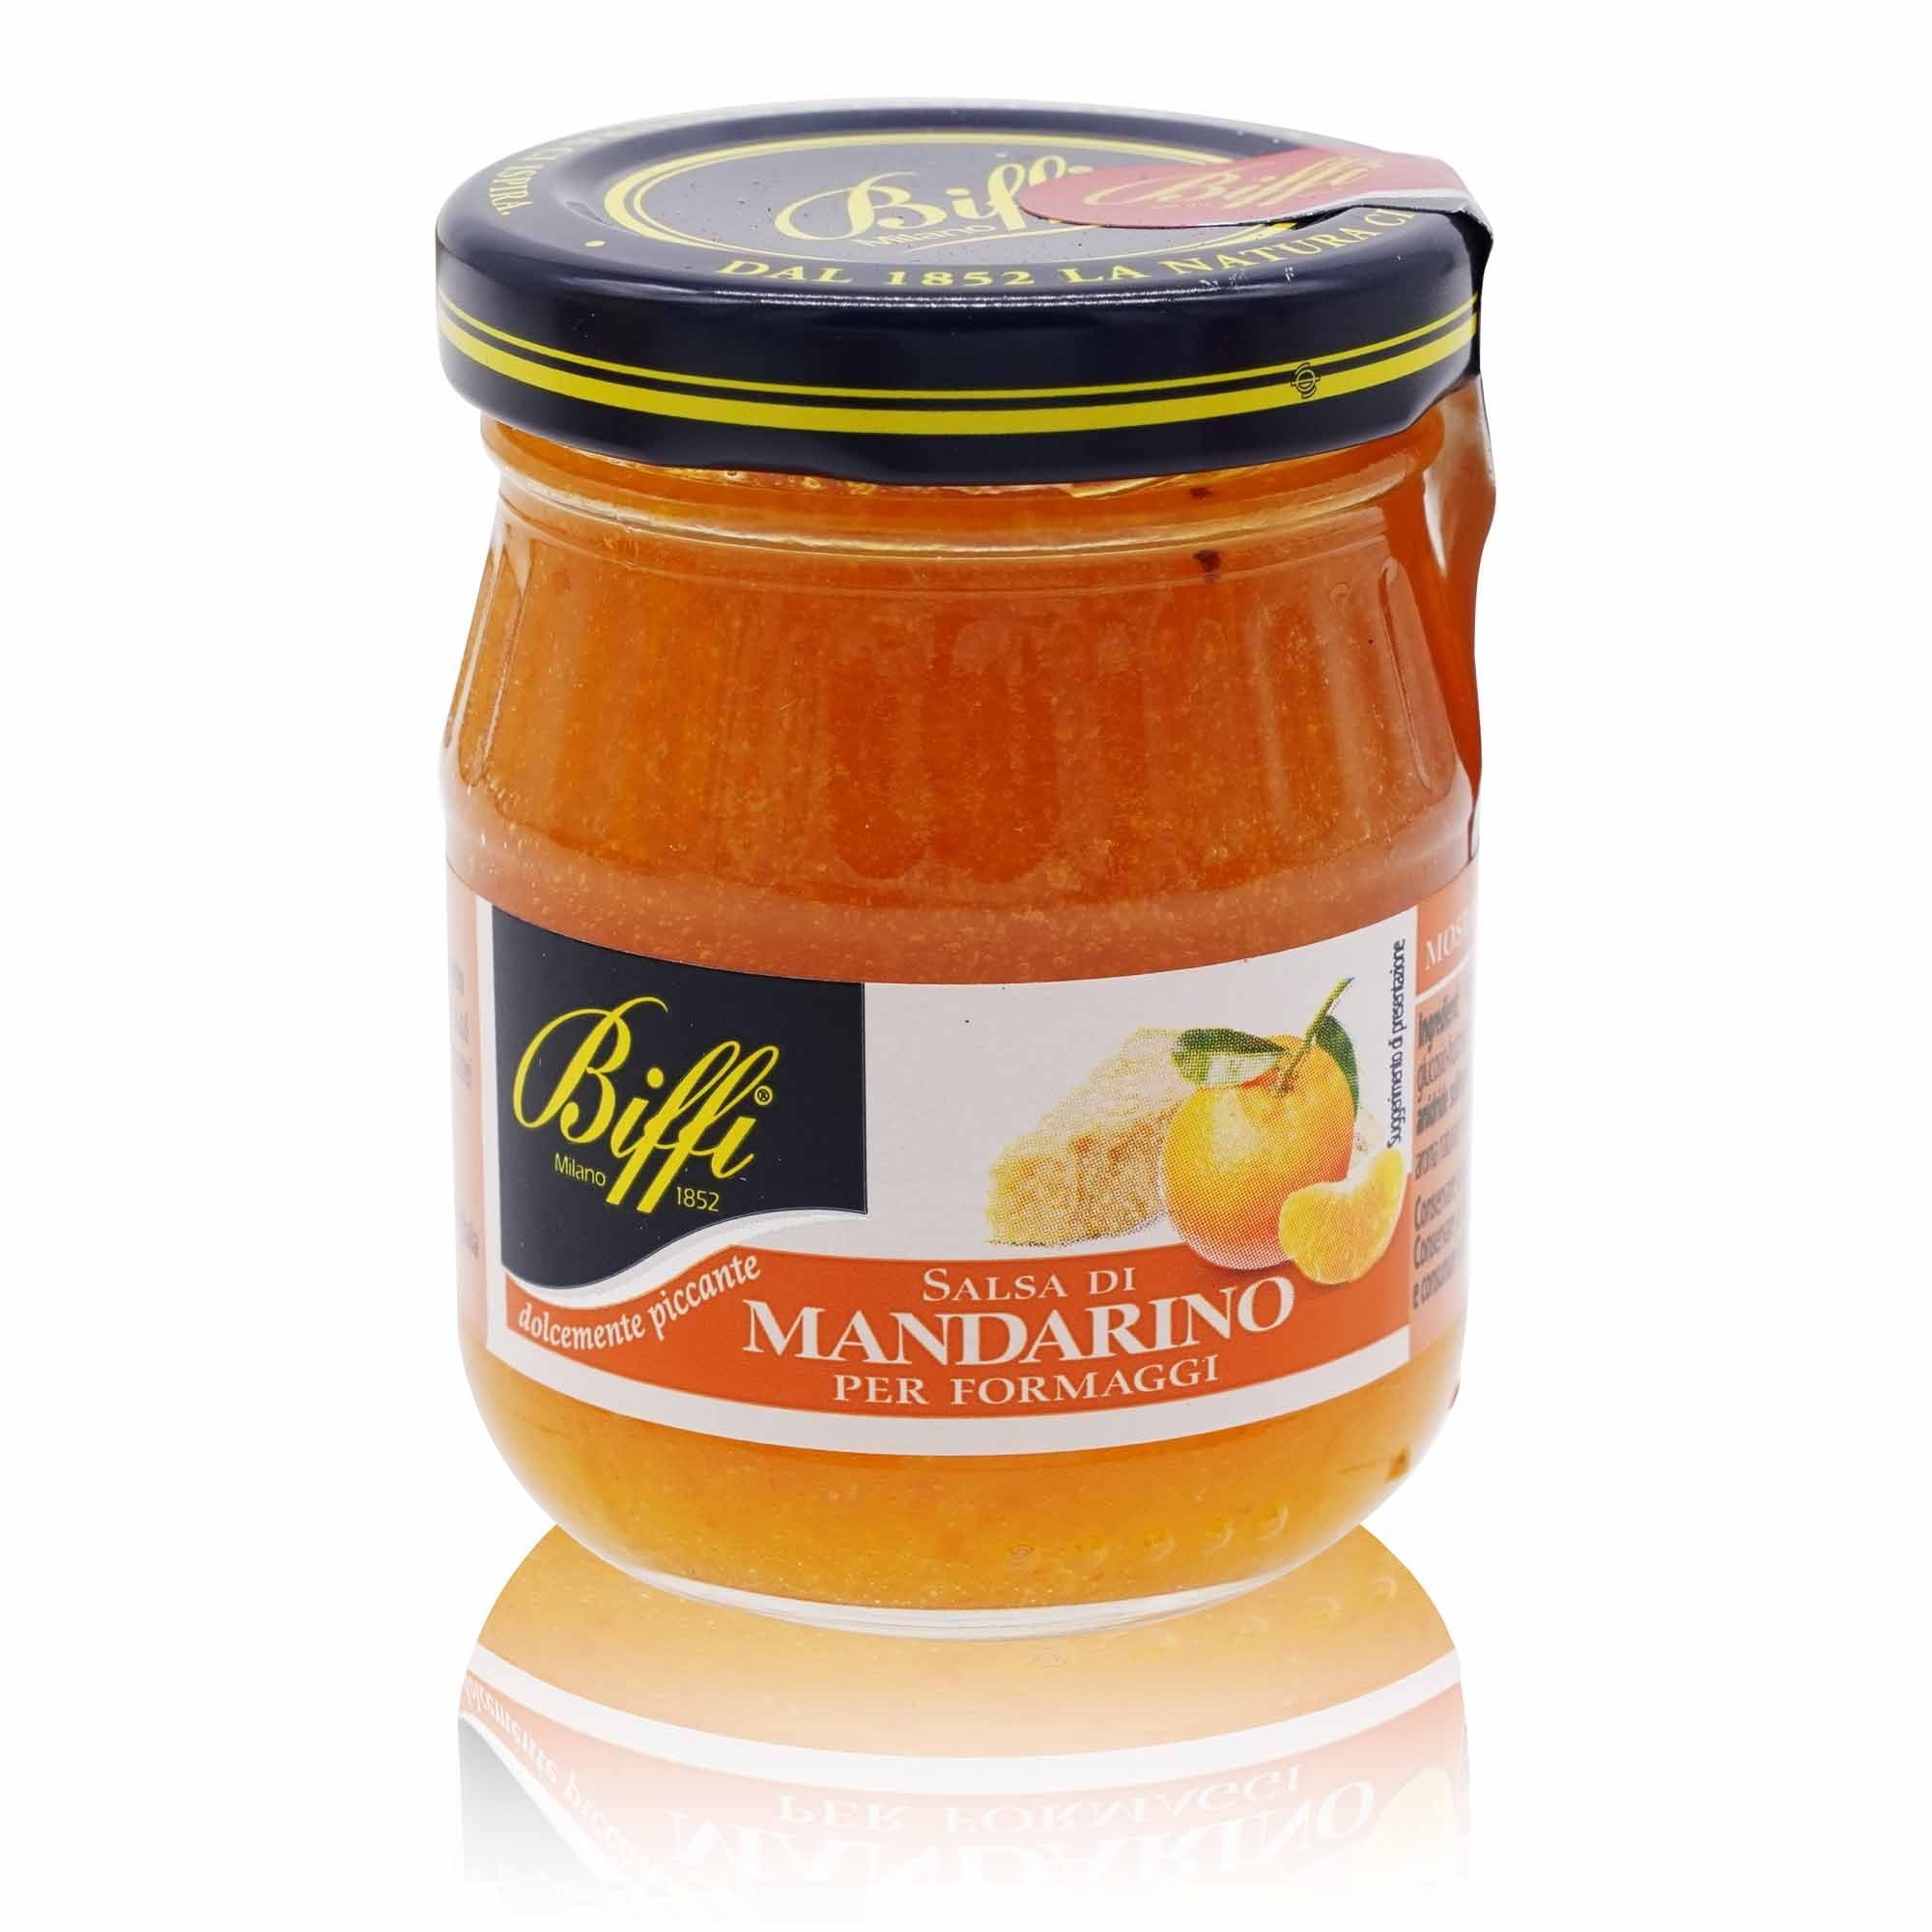 BIFFI Salsa di Mandarino per formaggi – Mandarinen - Salsa für Käse - 0,100kg - italienisch - einkaufen.de